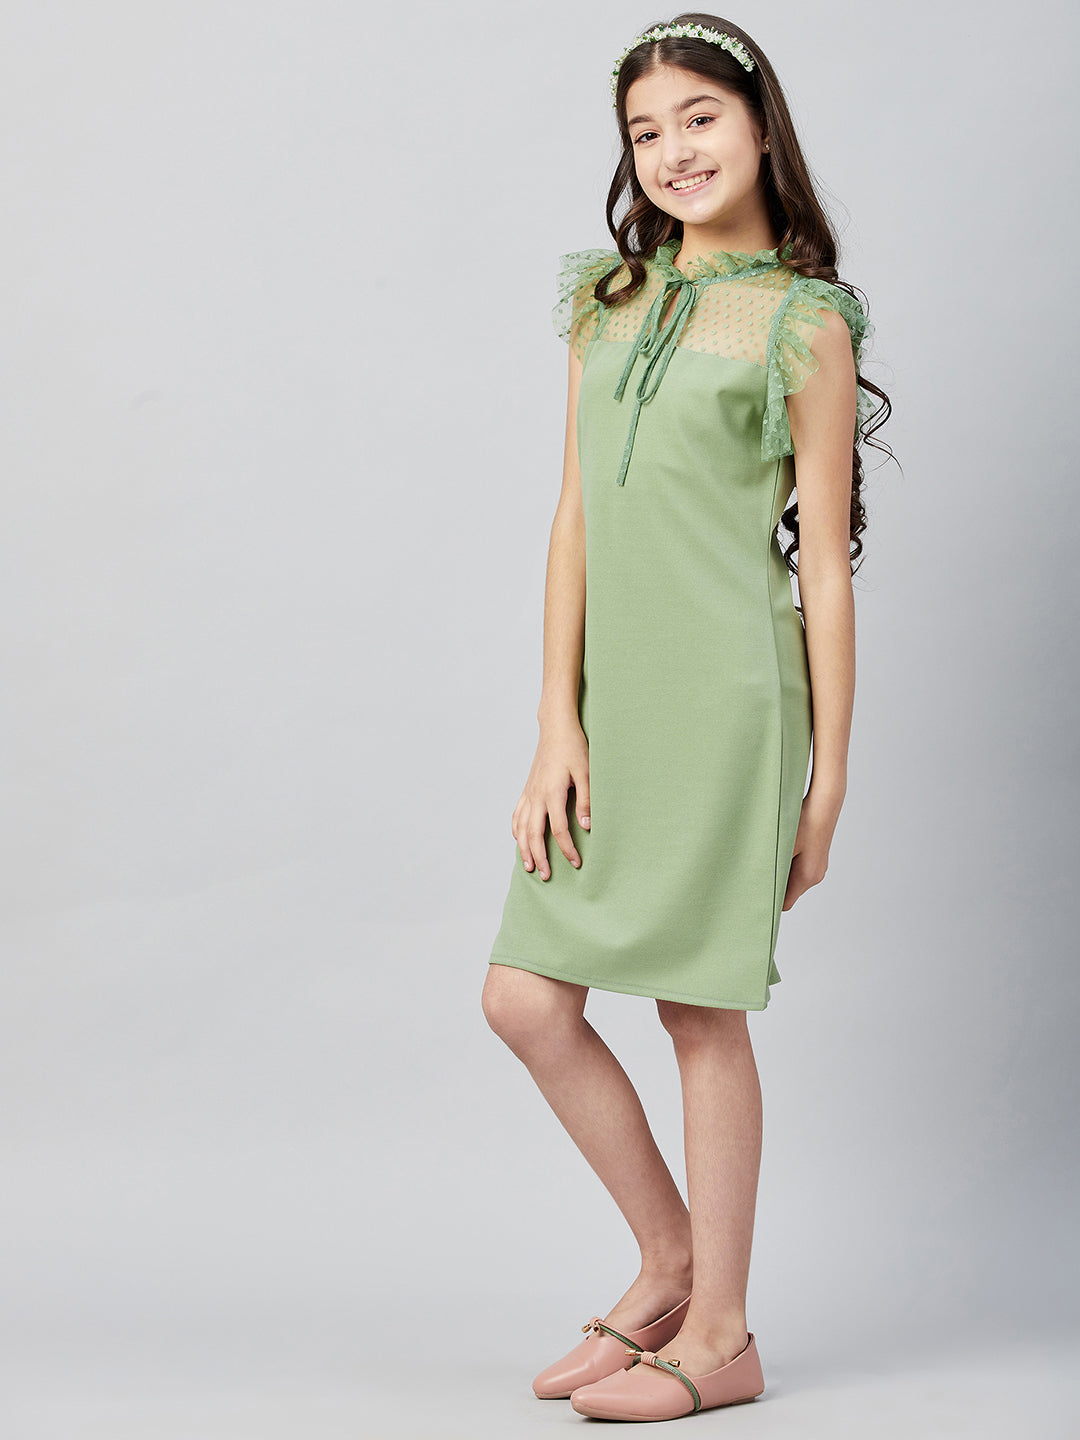 Athena Girl Green Off-Shoulder A-Line Dress - Athena Lifestyle